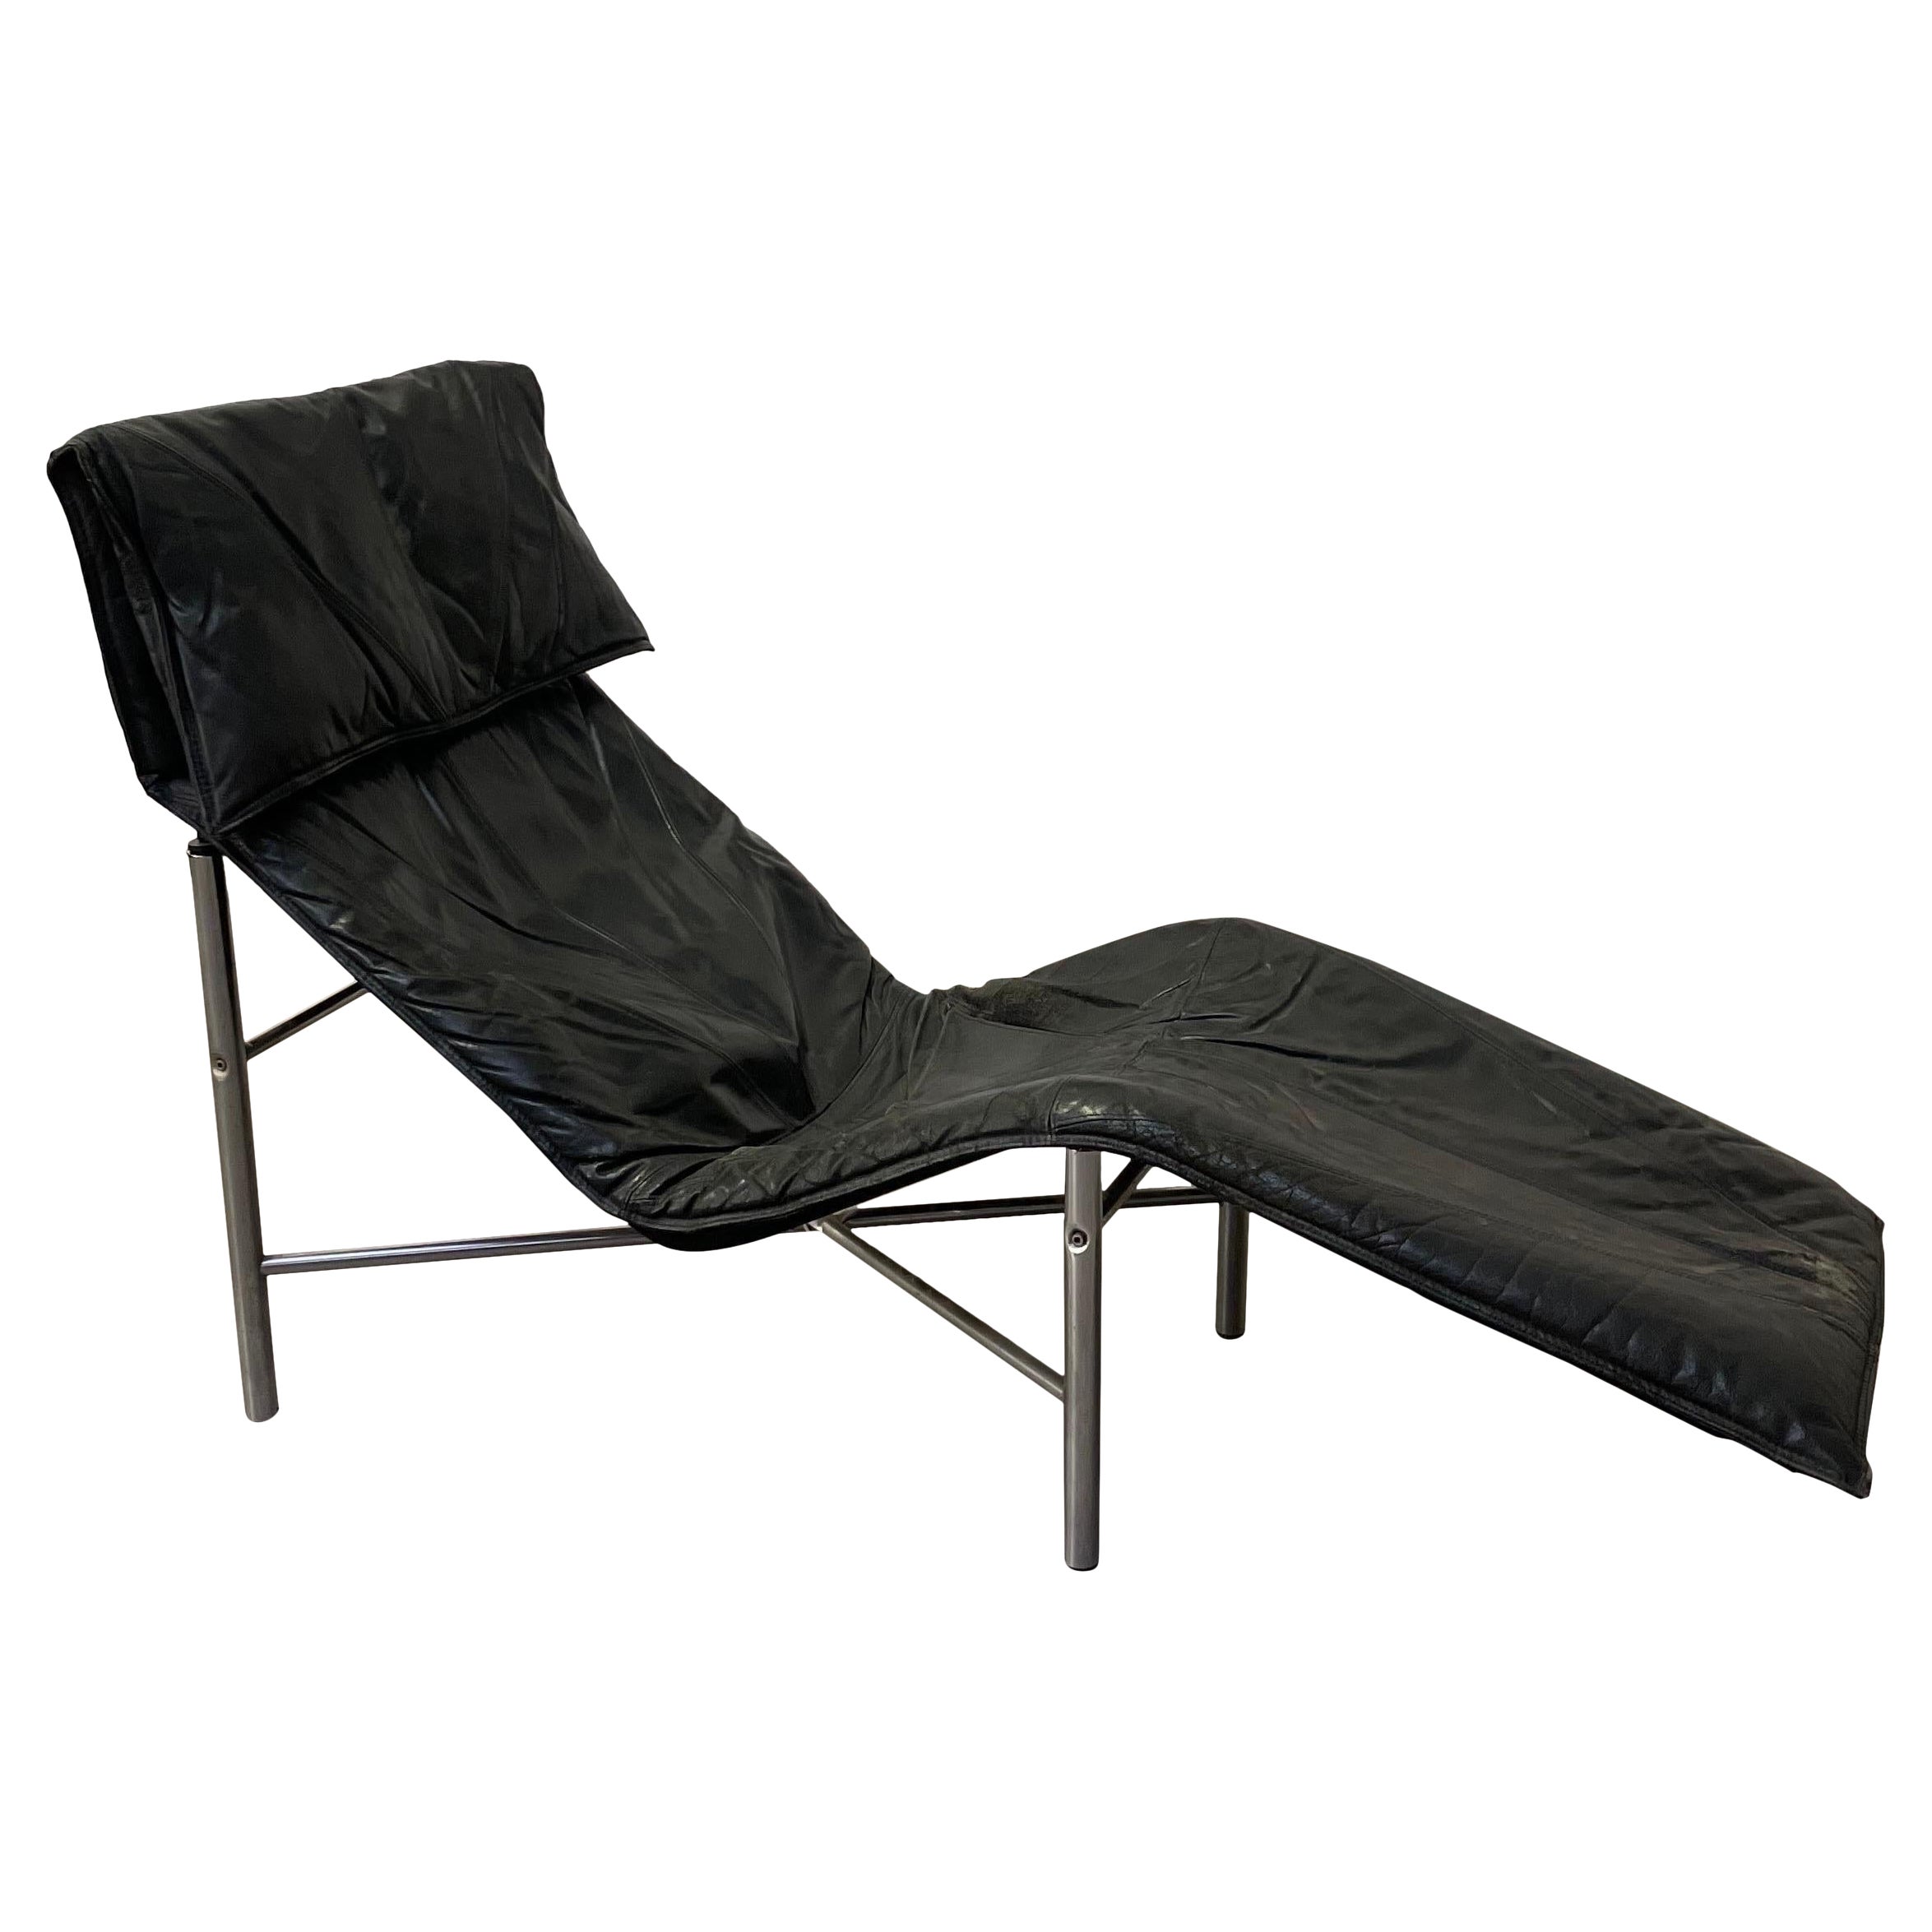 Chaise longue "Skye" en cuir noir par Tord Björklund, Ikea Suède, années 1970